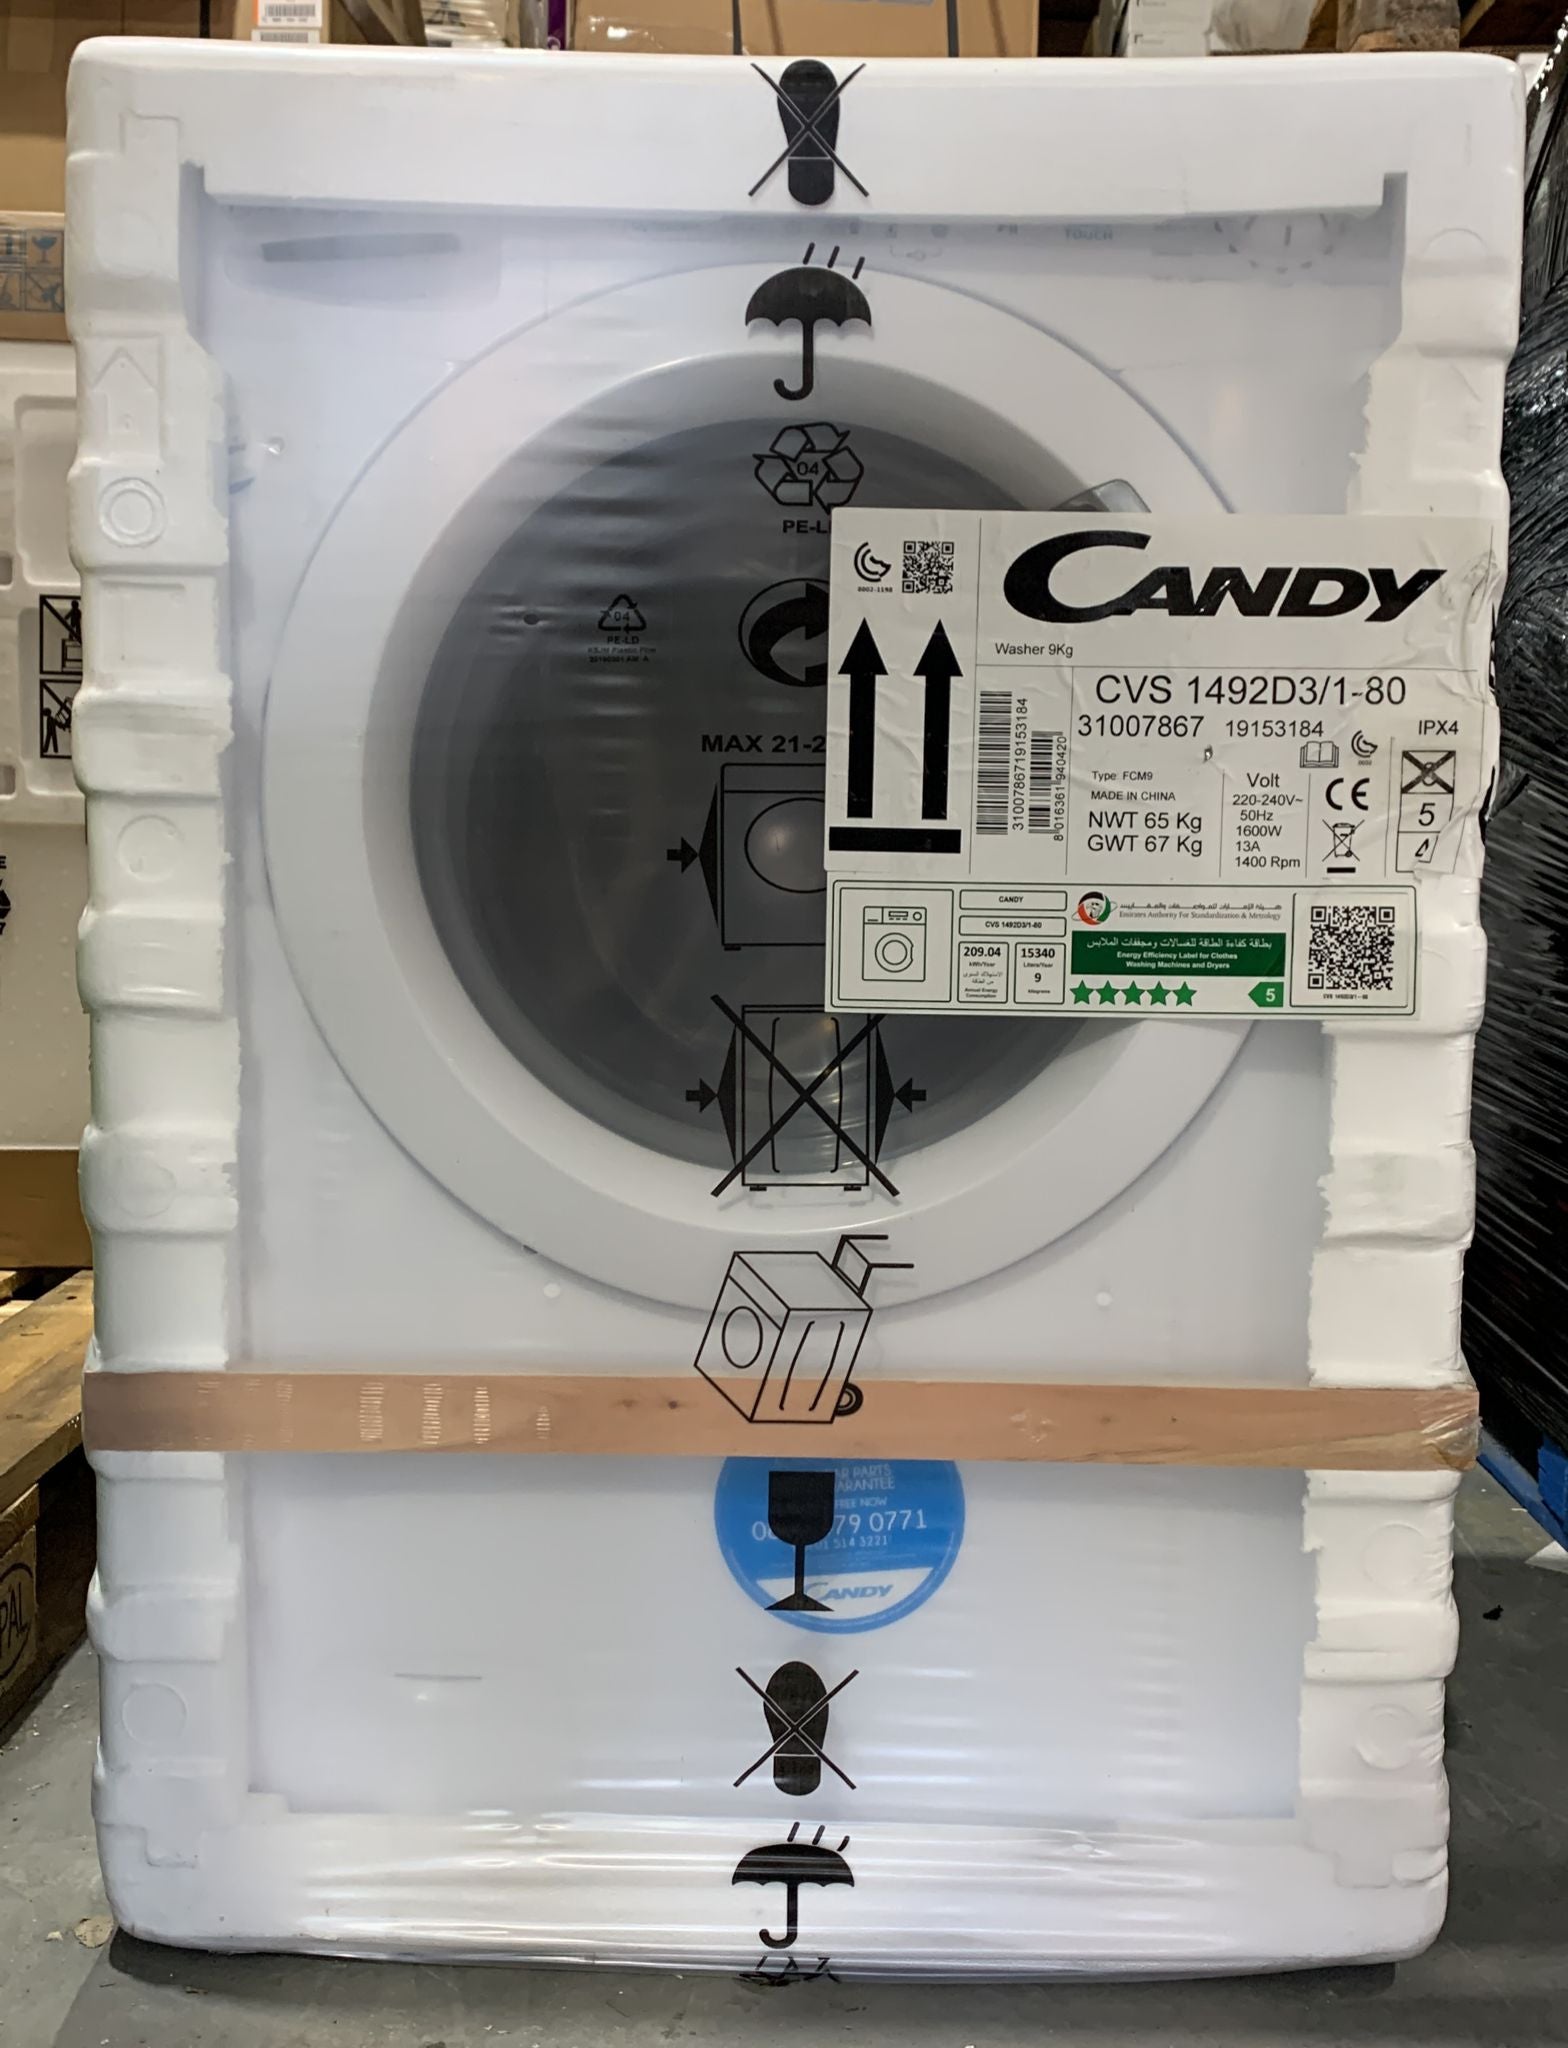 Candy CVS 1492D3 White Freestanding Washing machine, 9kg 0420